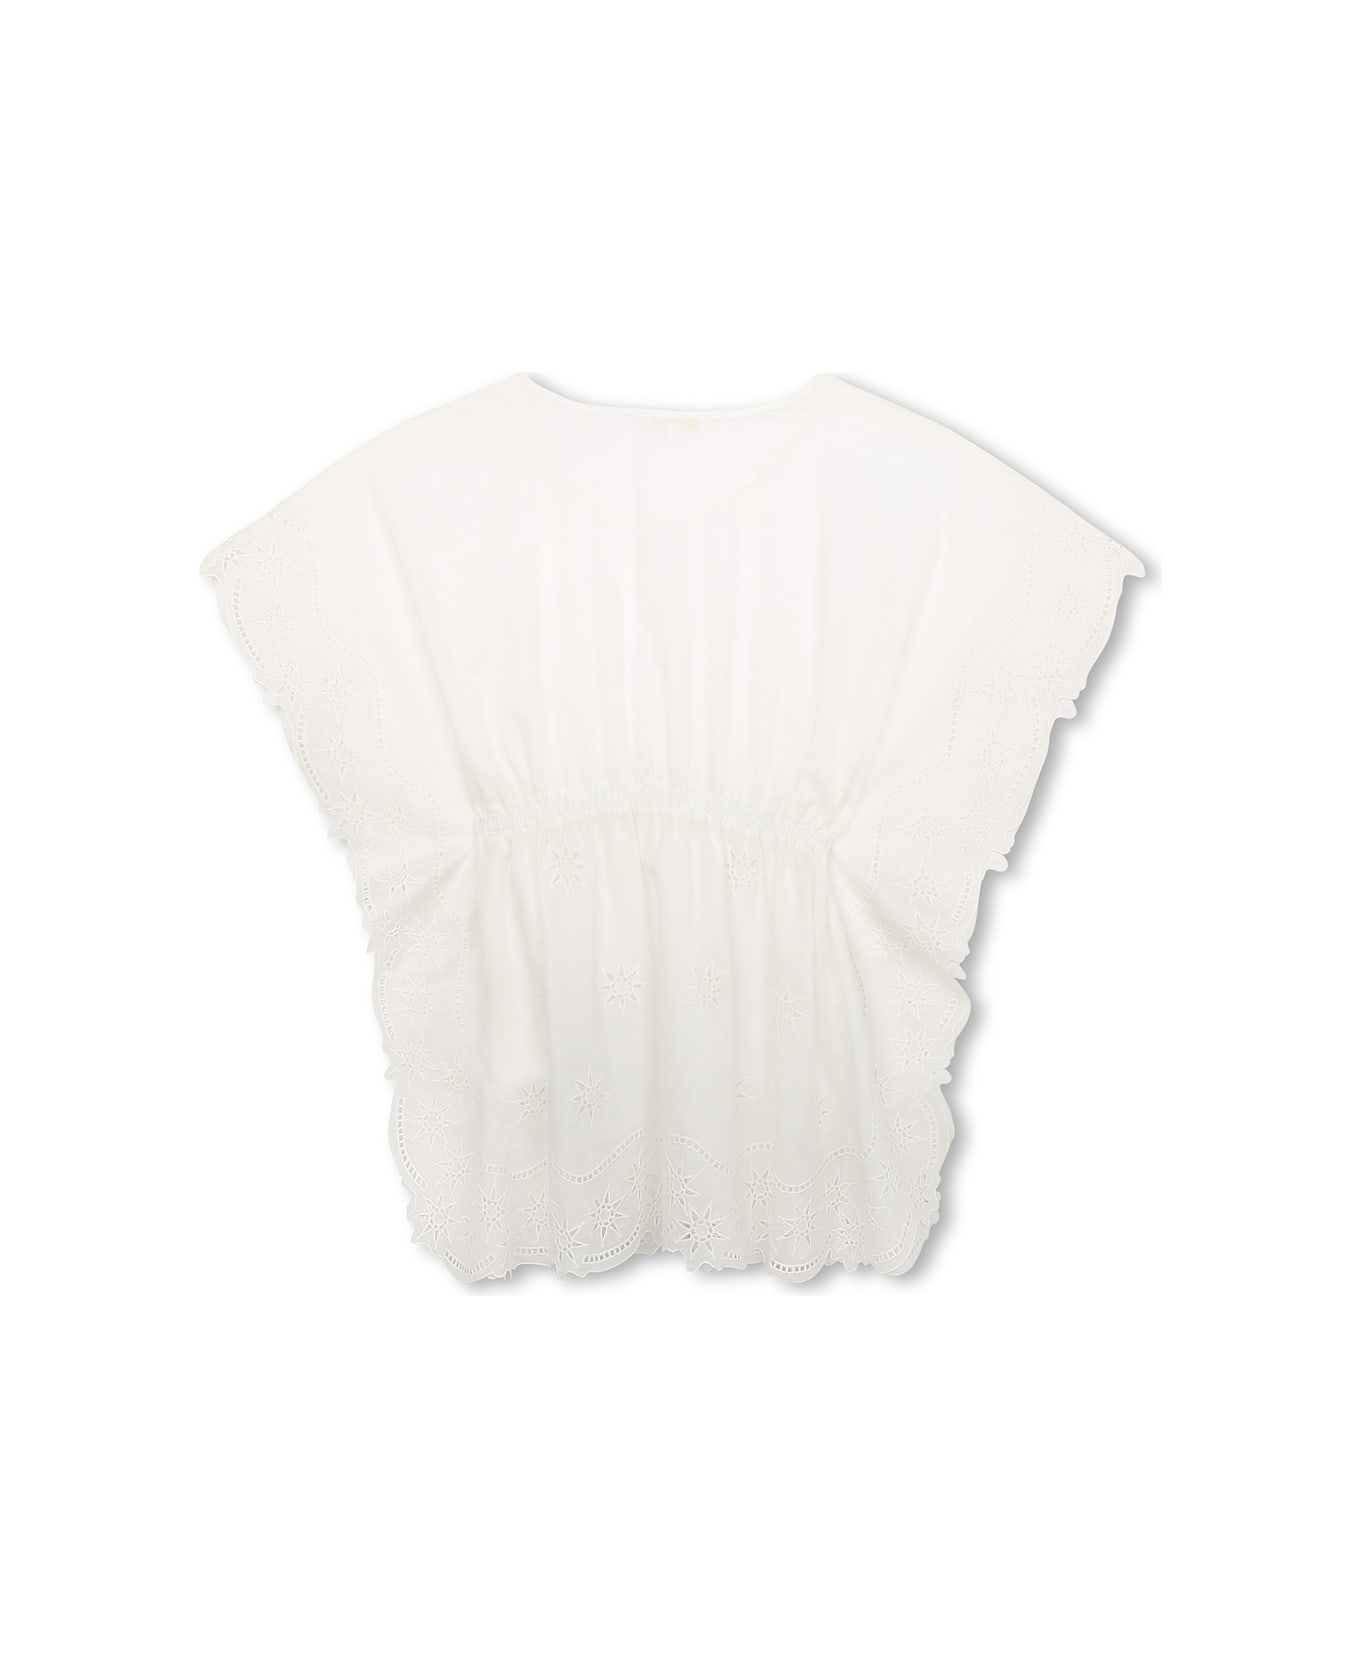 Chloé White Sleeveless Dress With Ruffles And Stars - White